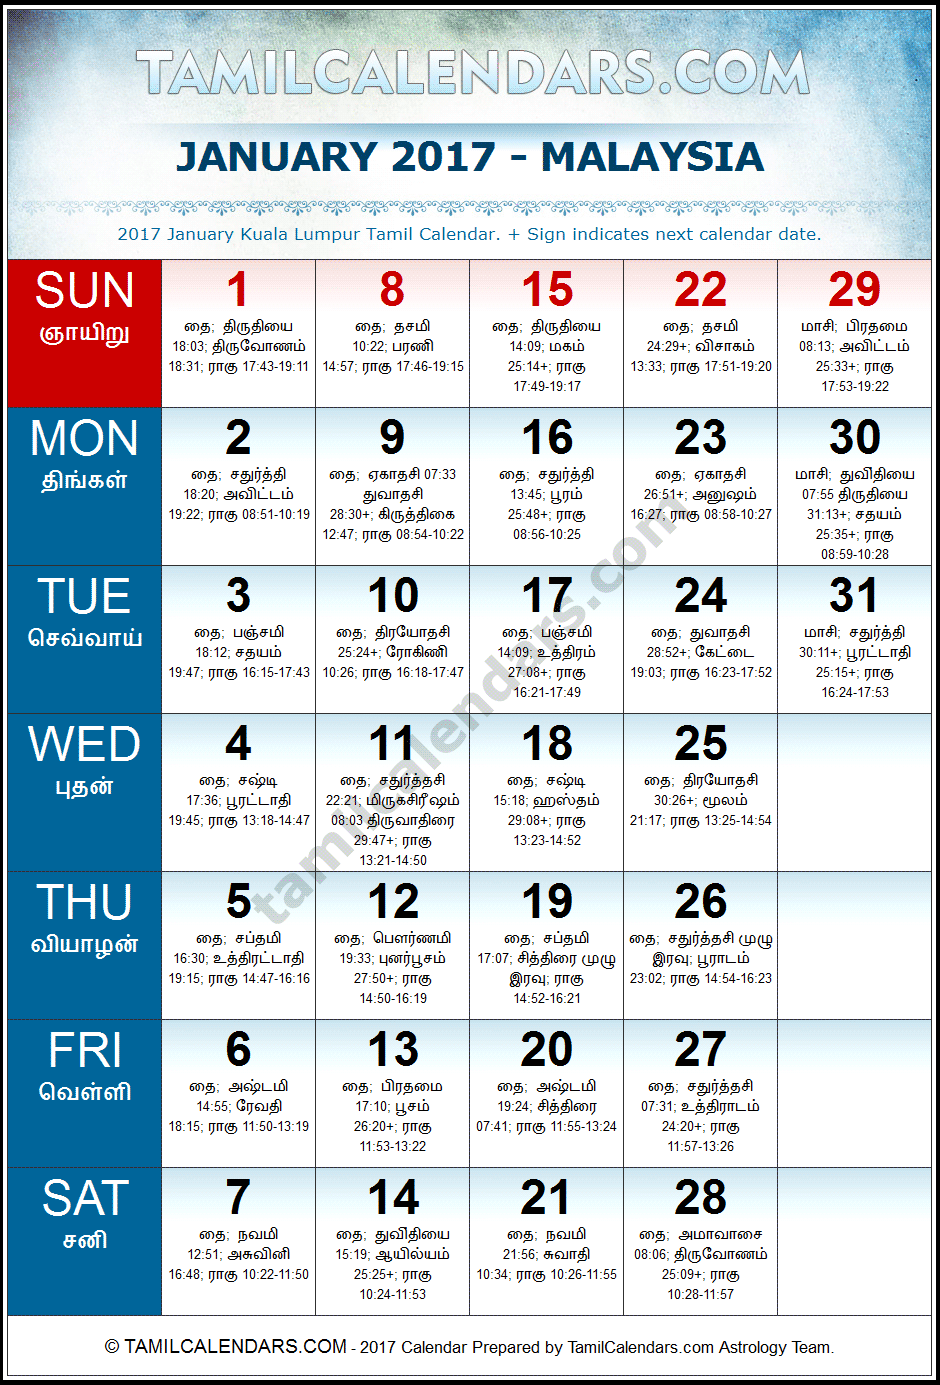 January 2017 Tamil Calendar for Malaysia (Kuala Lumpur)